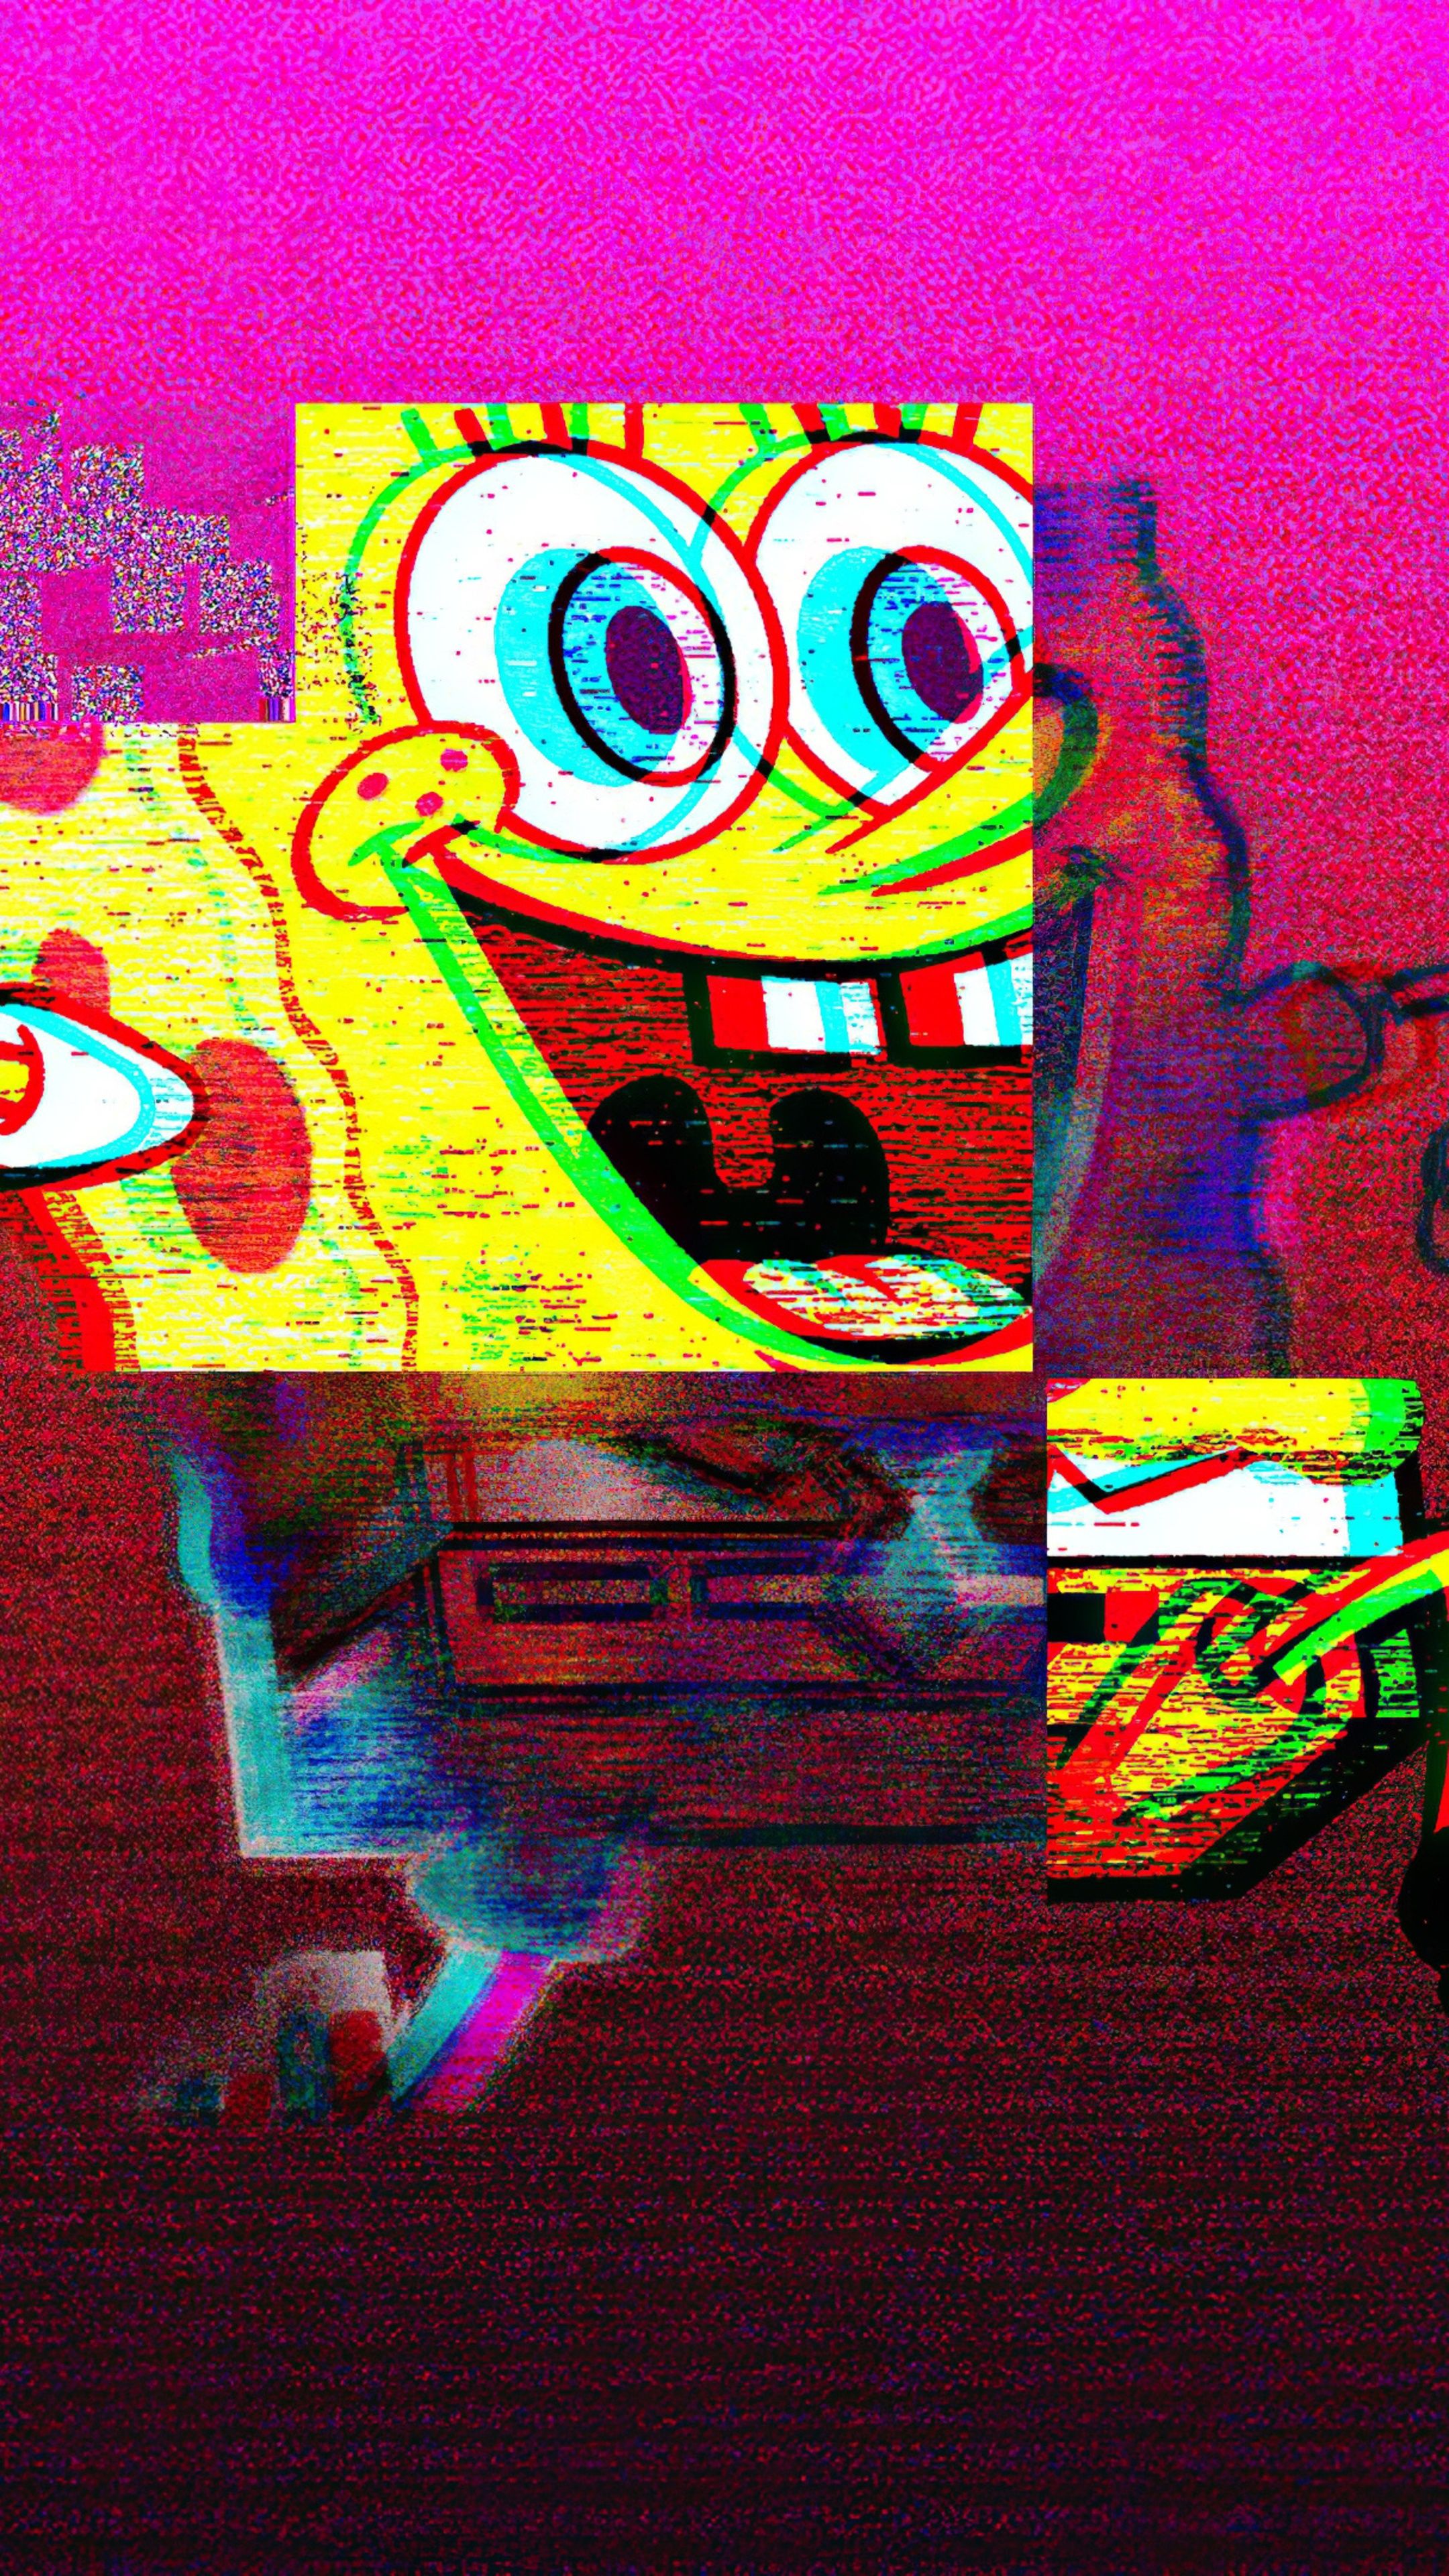 A sponge bob square pants character is holding up some food - SpongeBob, glitter